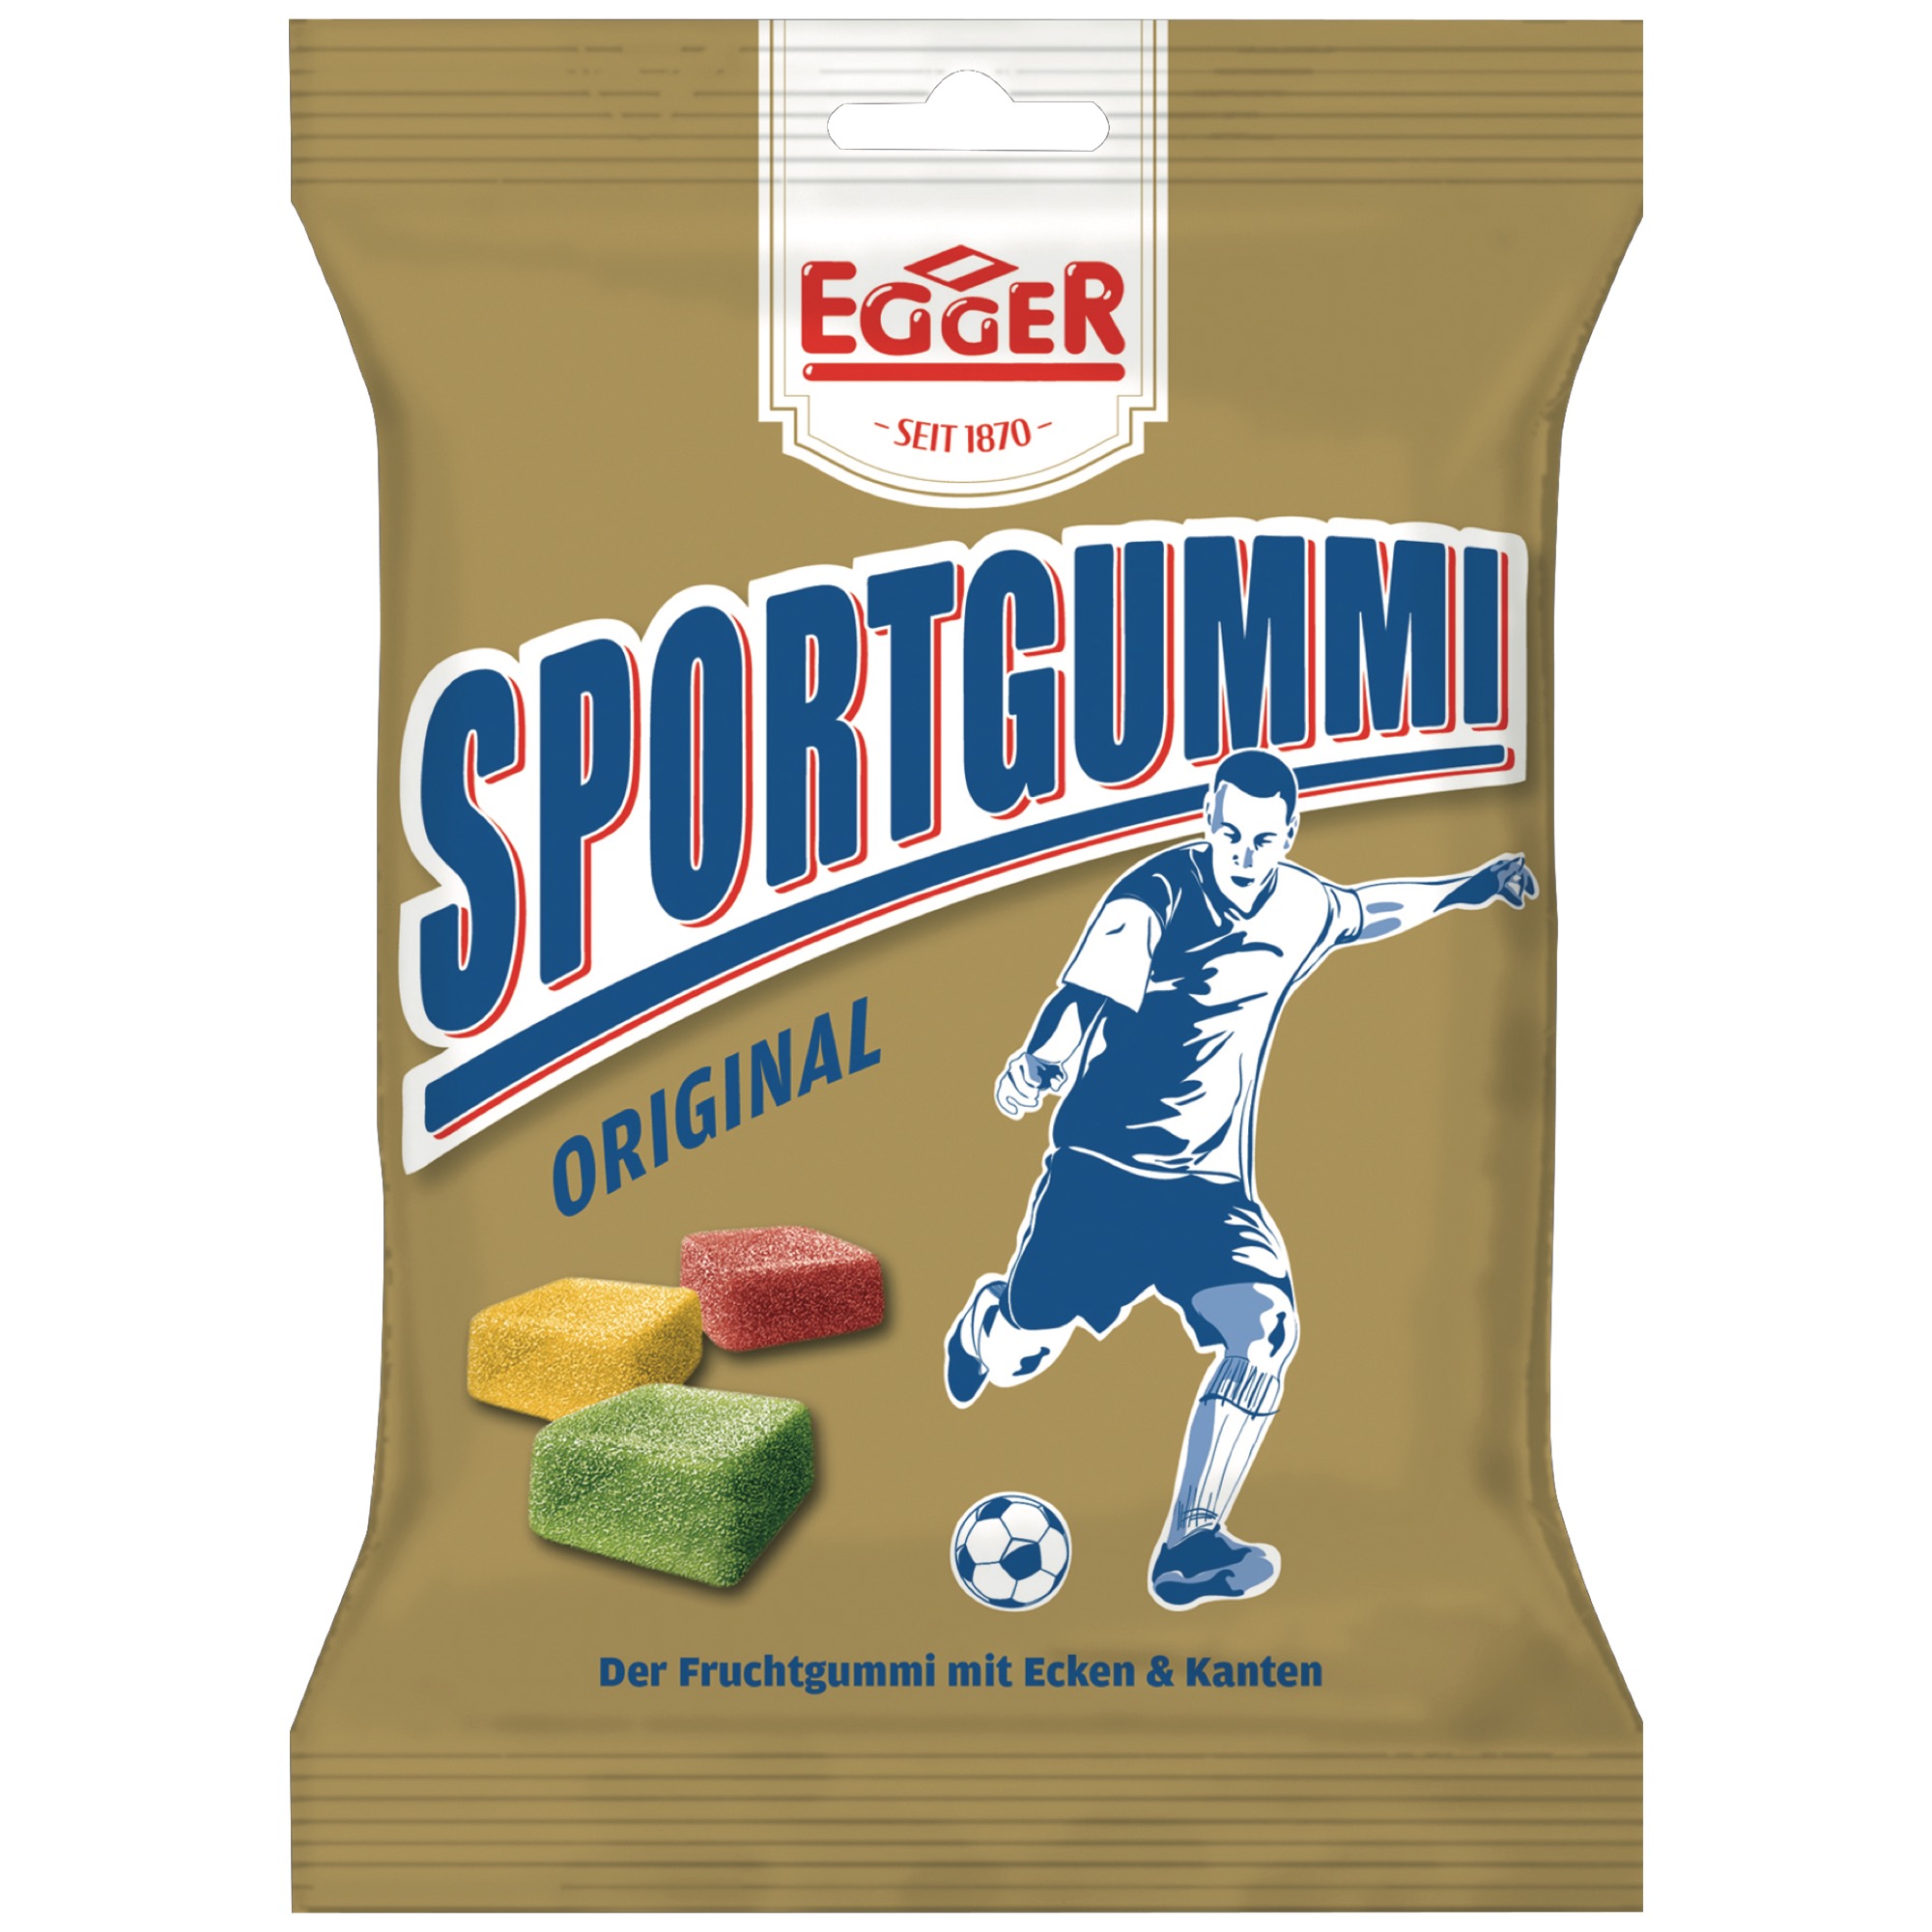 Egger Sportgummi 175g Original